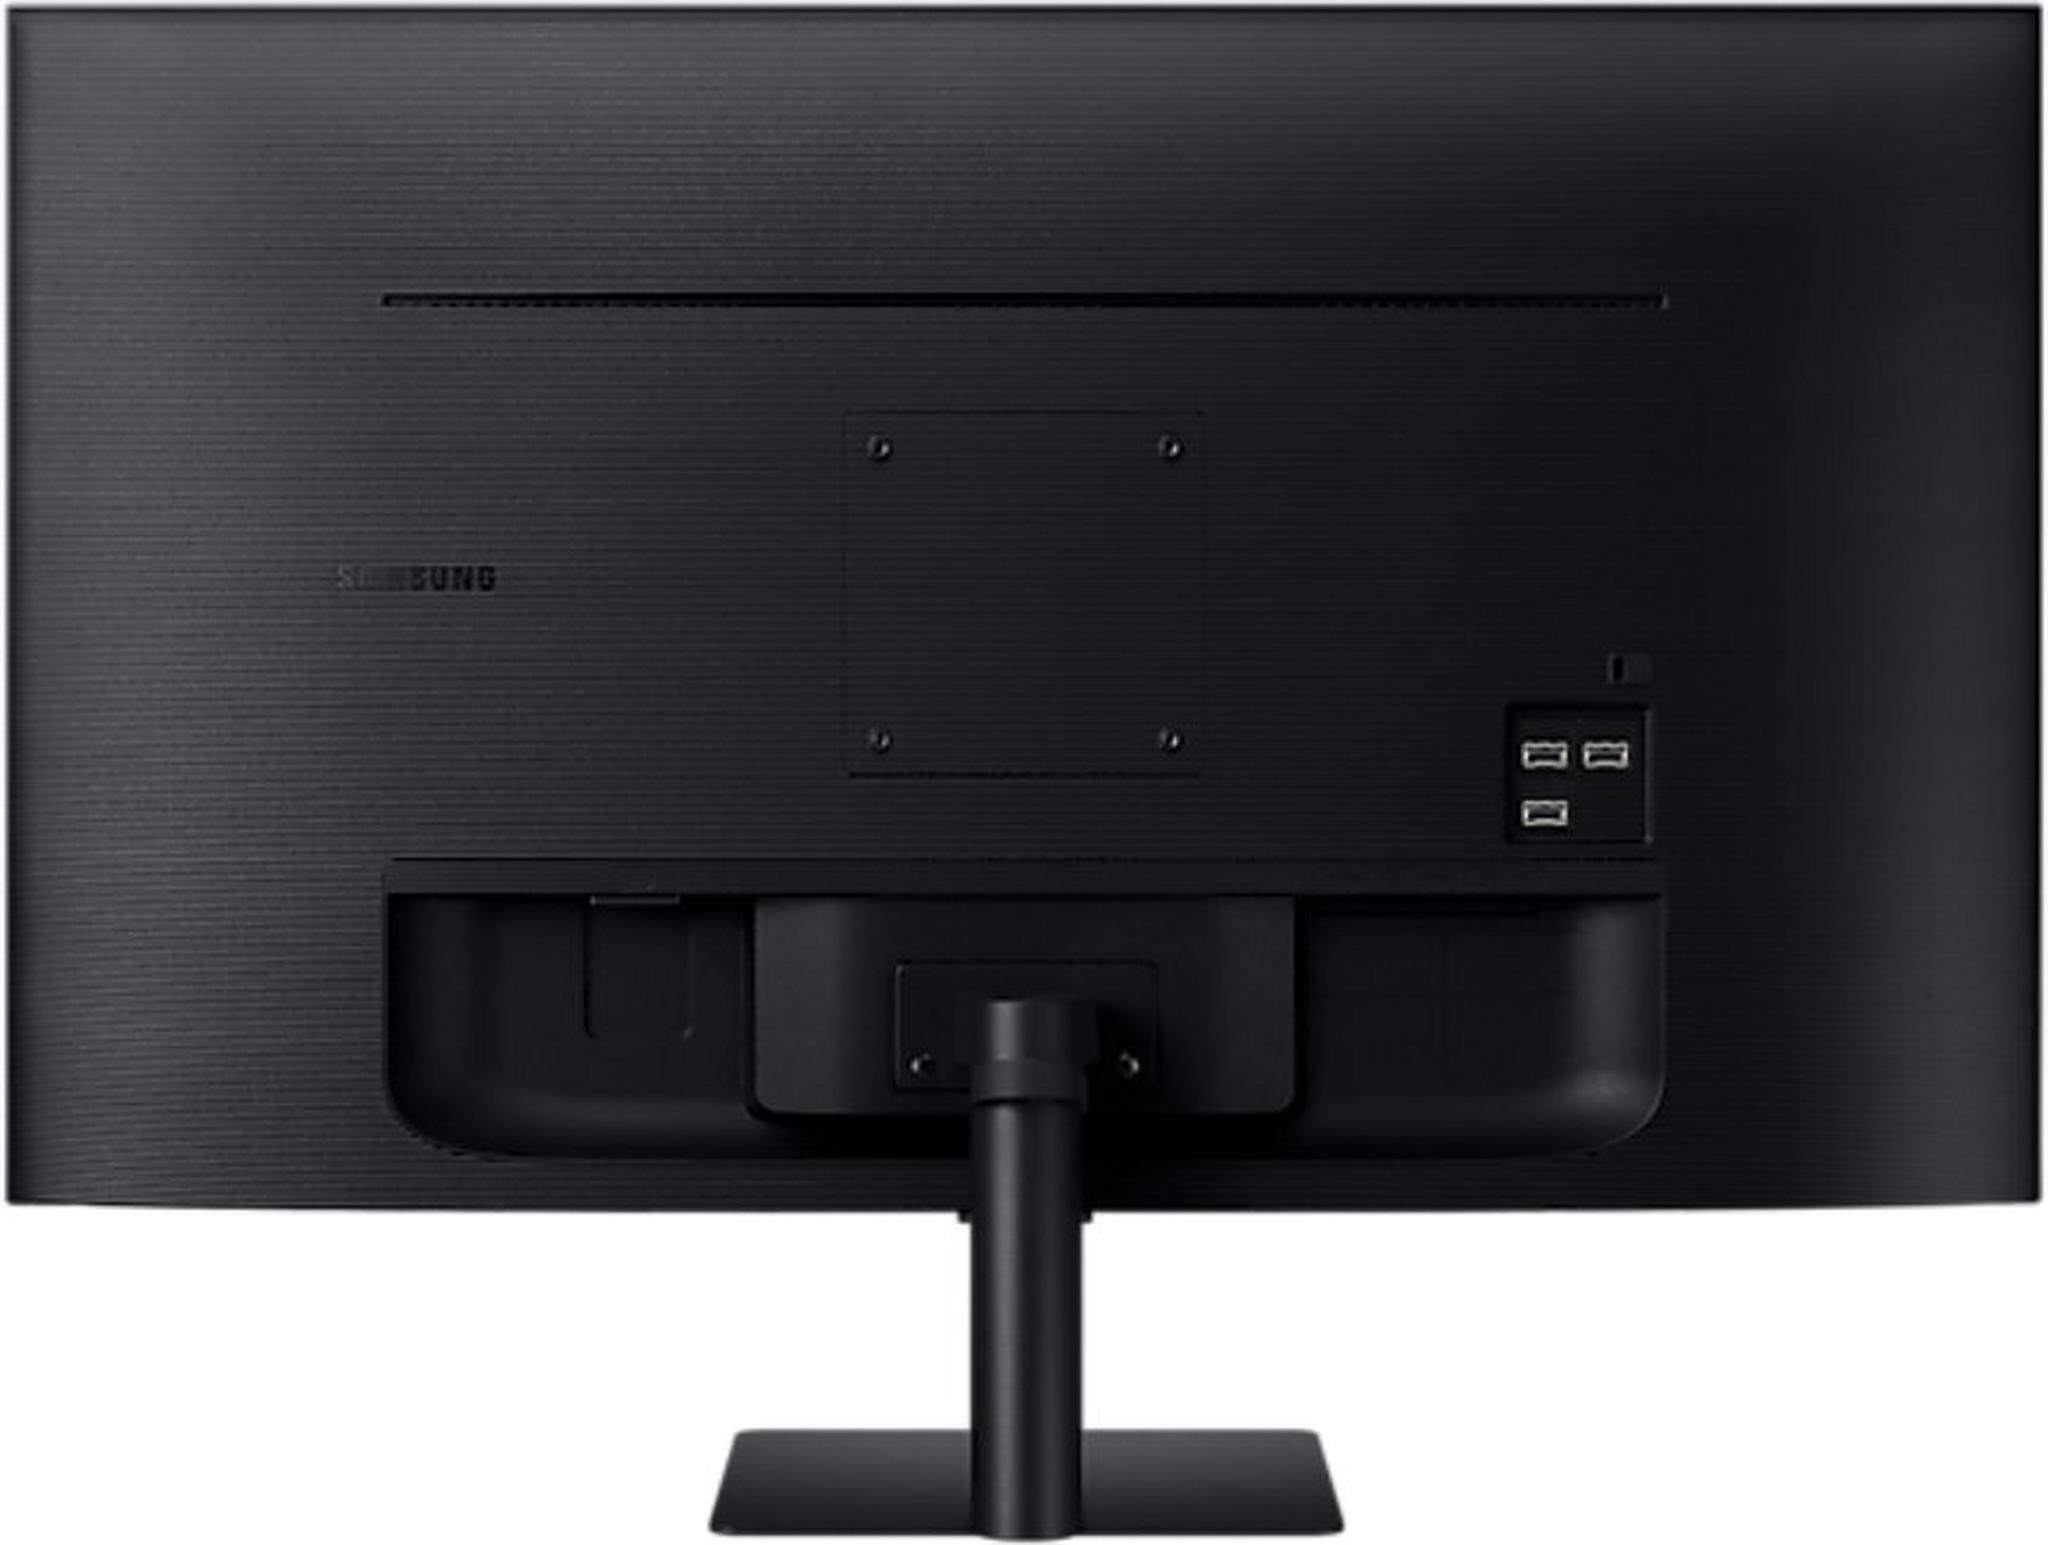 Samsung 32-inch UHD Smart Monitor - Black